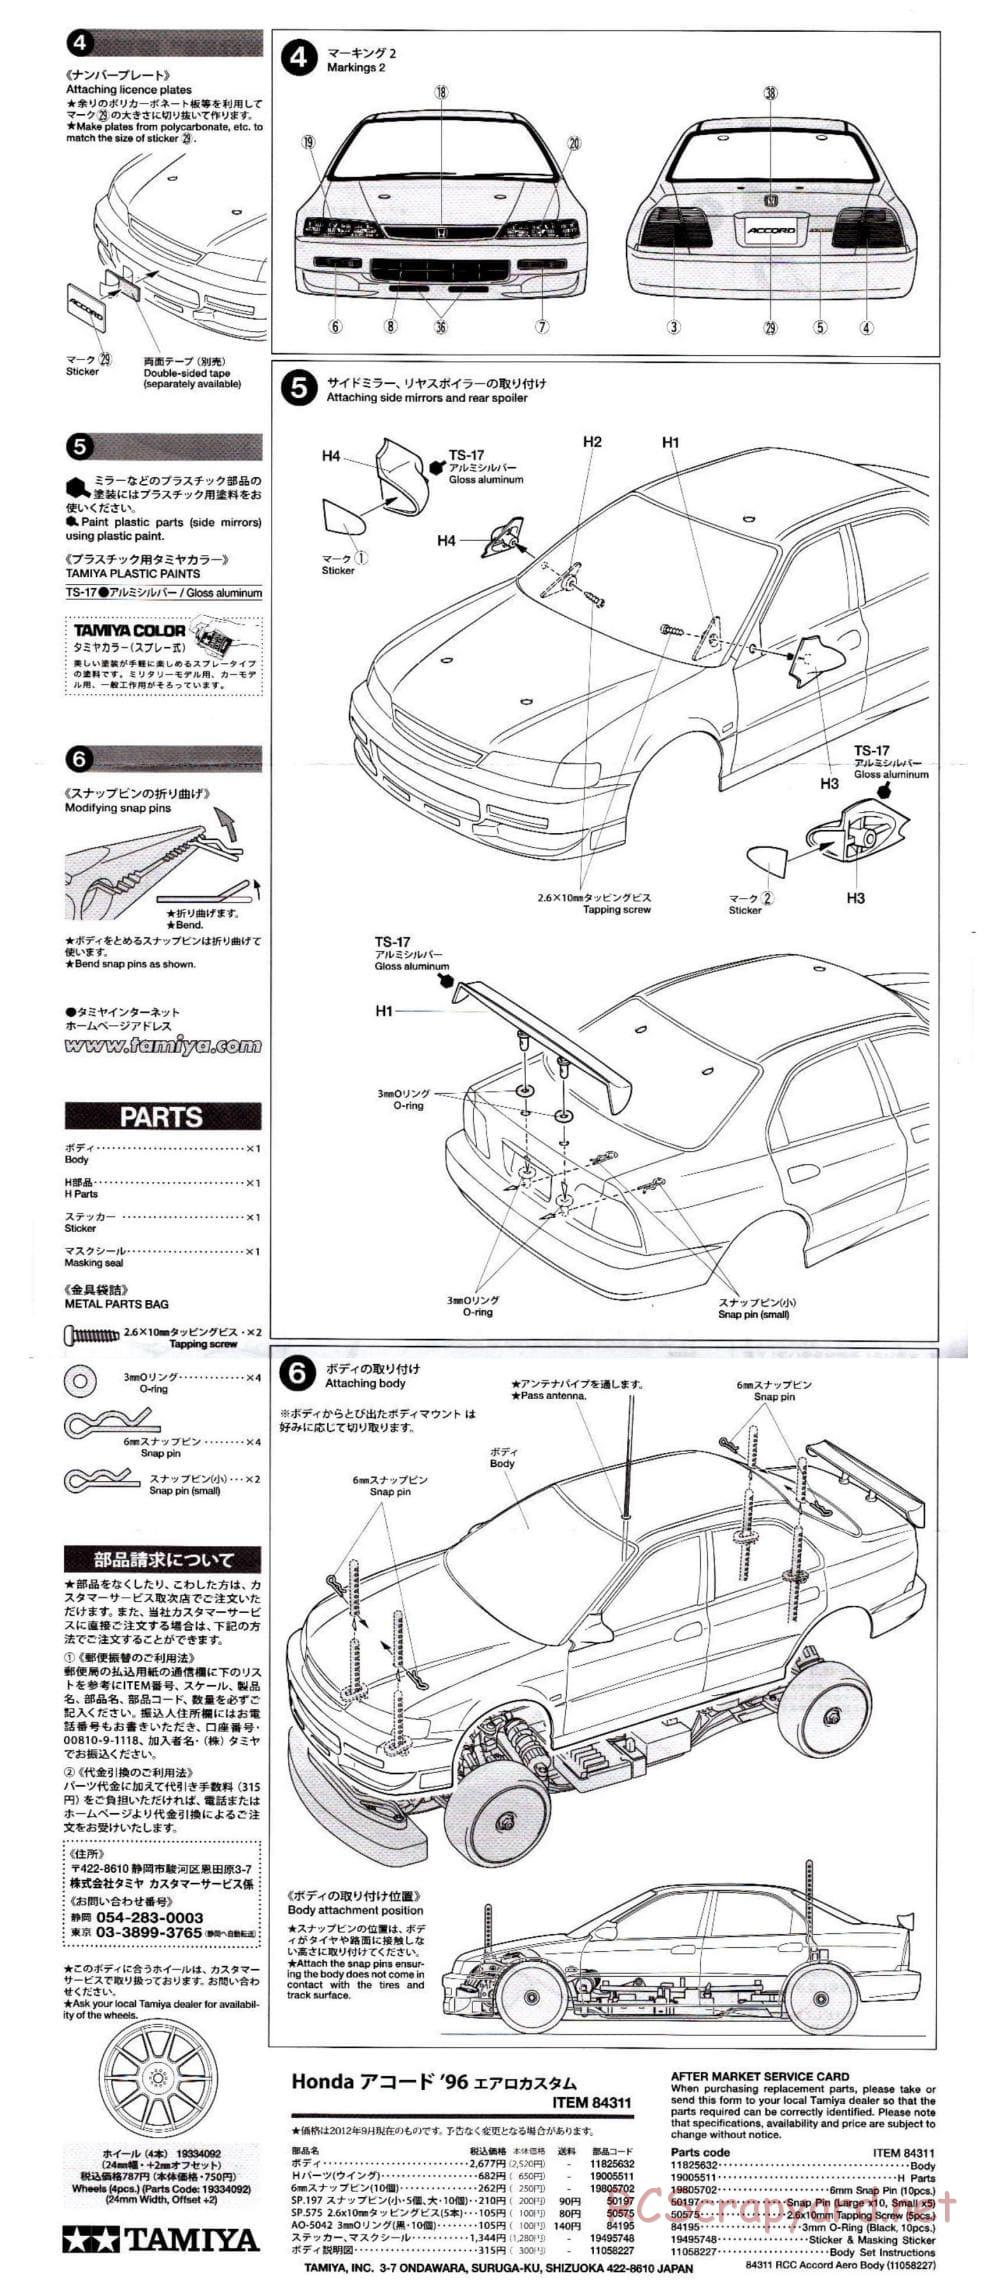 Tamiya - Honda Accord Aero Custom - Body - Manual - Page 2